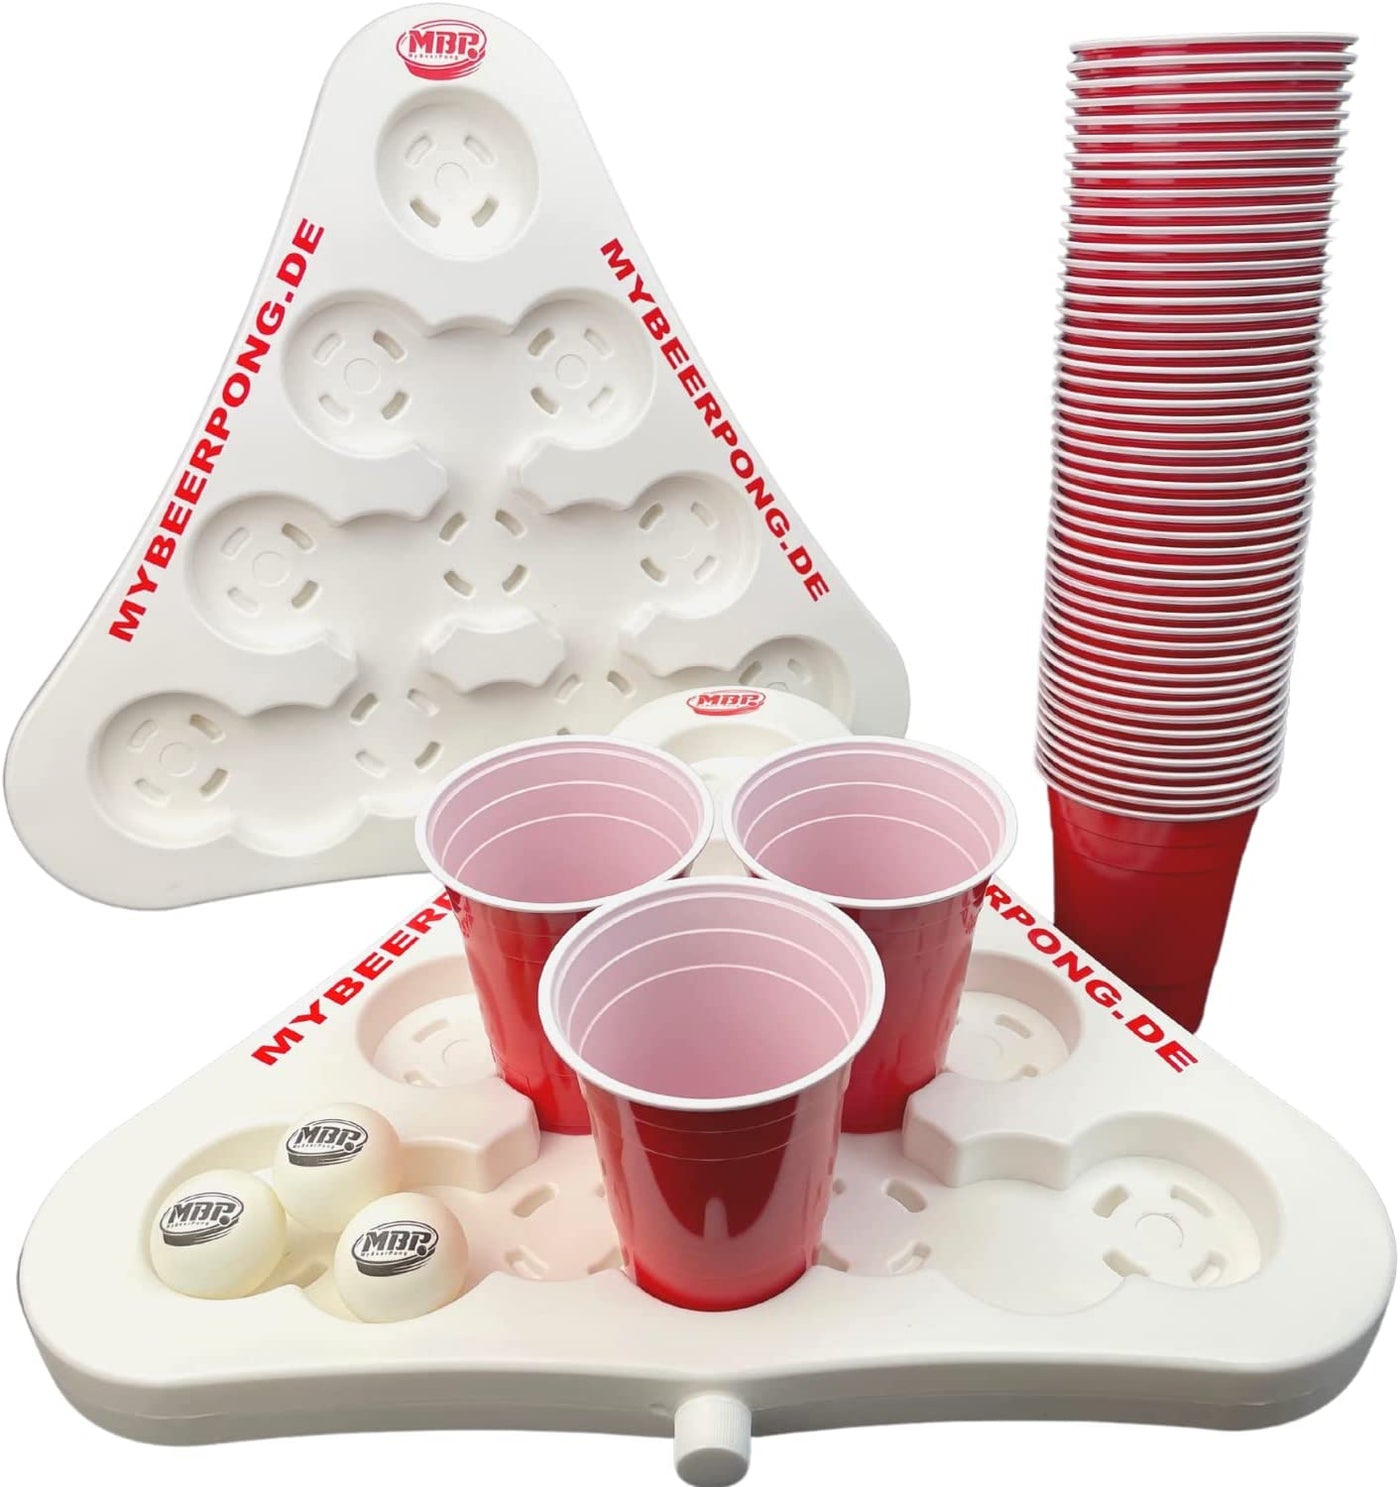 2x weiße BeerPong Racks + 50x Red Cups + 3x weiße Beer-Pong Bälle